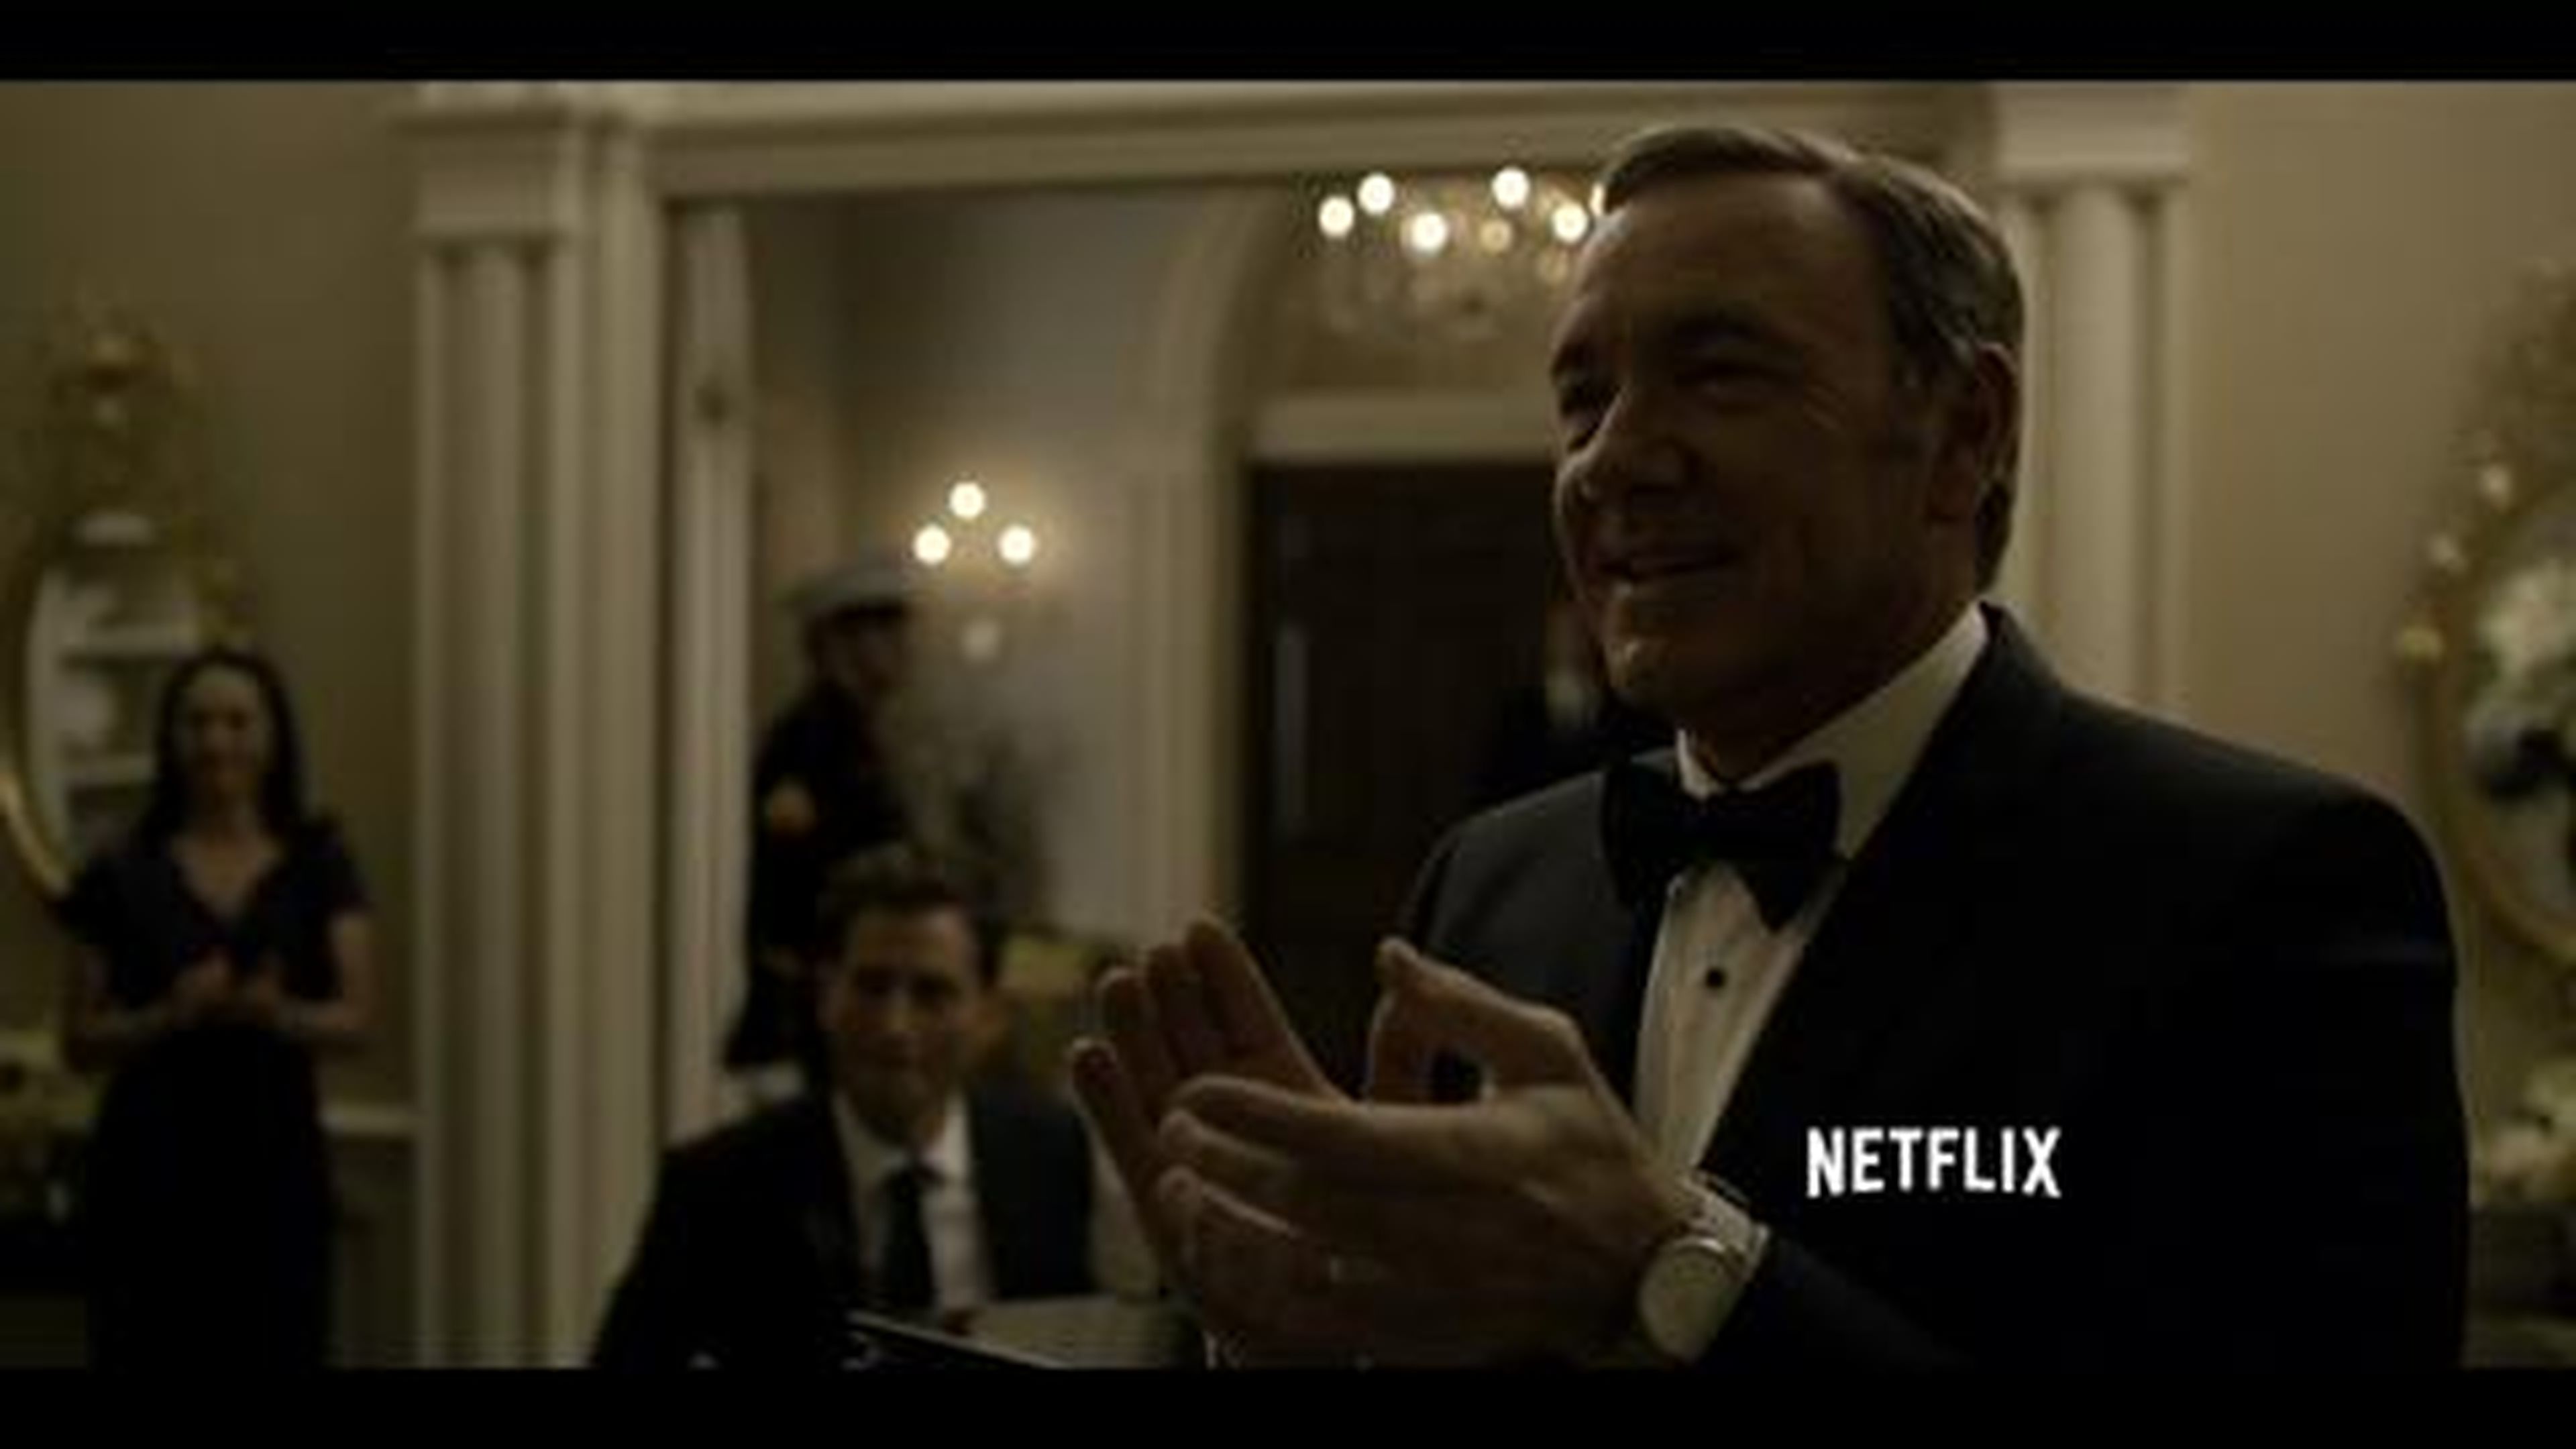 House of Cards - Season 3 - Official Trailer - Netflix [HD]